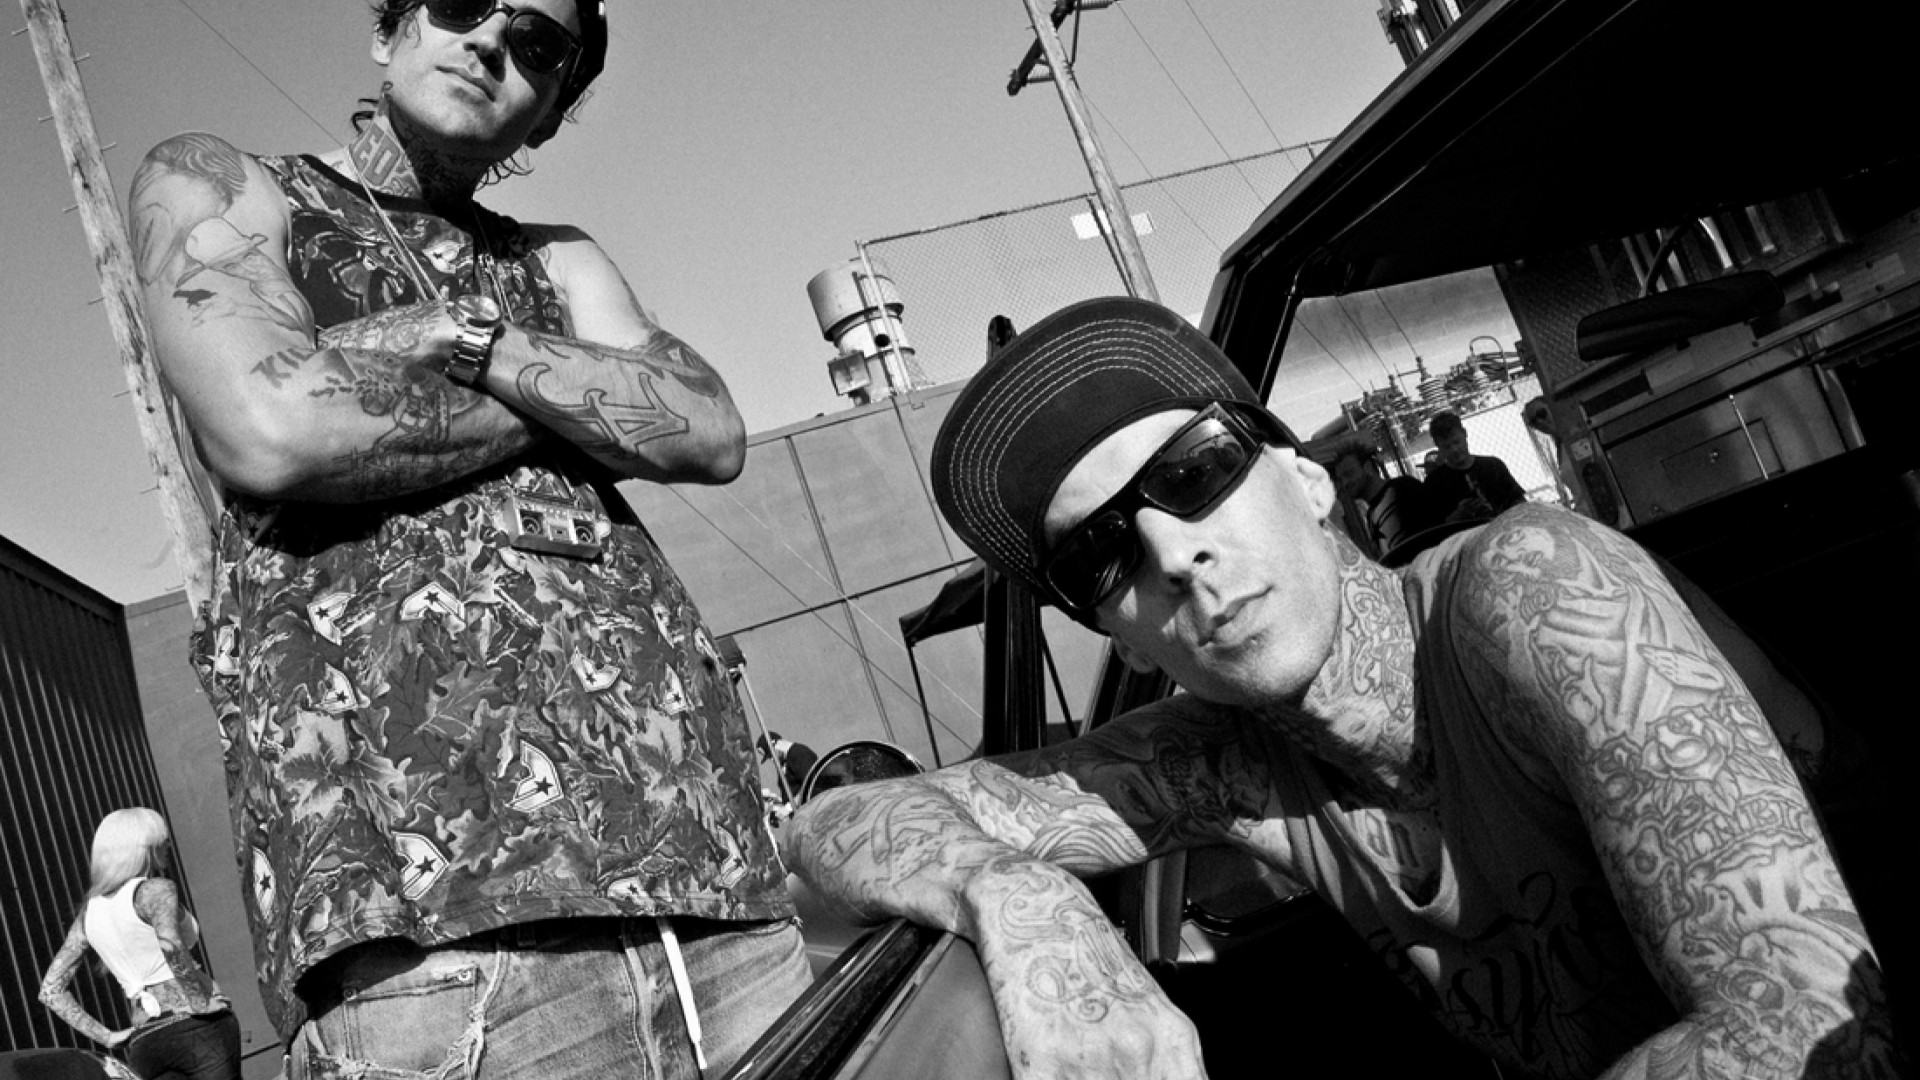 This Michael Wayne, Travis Barker, Blink -182, Punk, American rapper, actor, boxing bit, tattoo (horizontal)